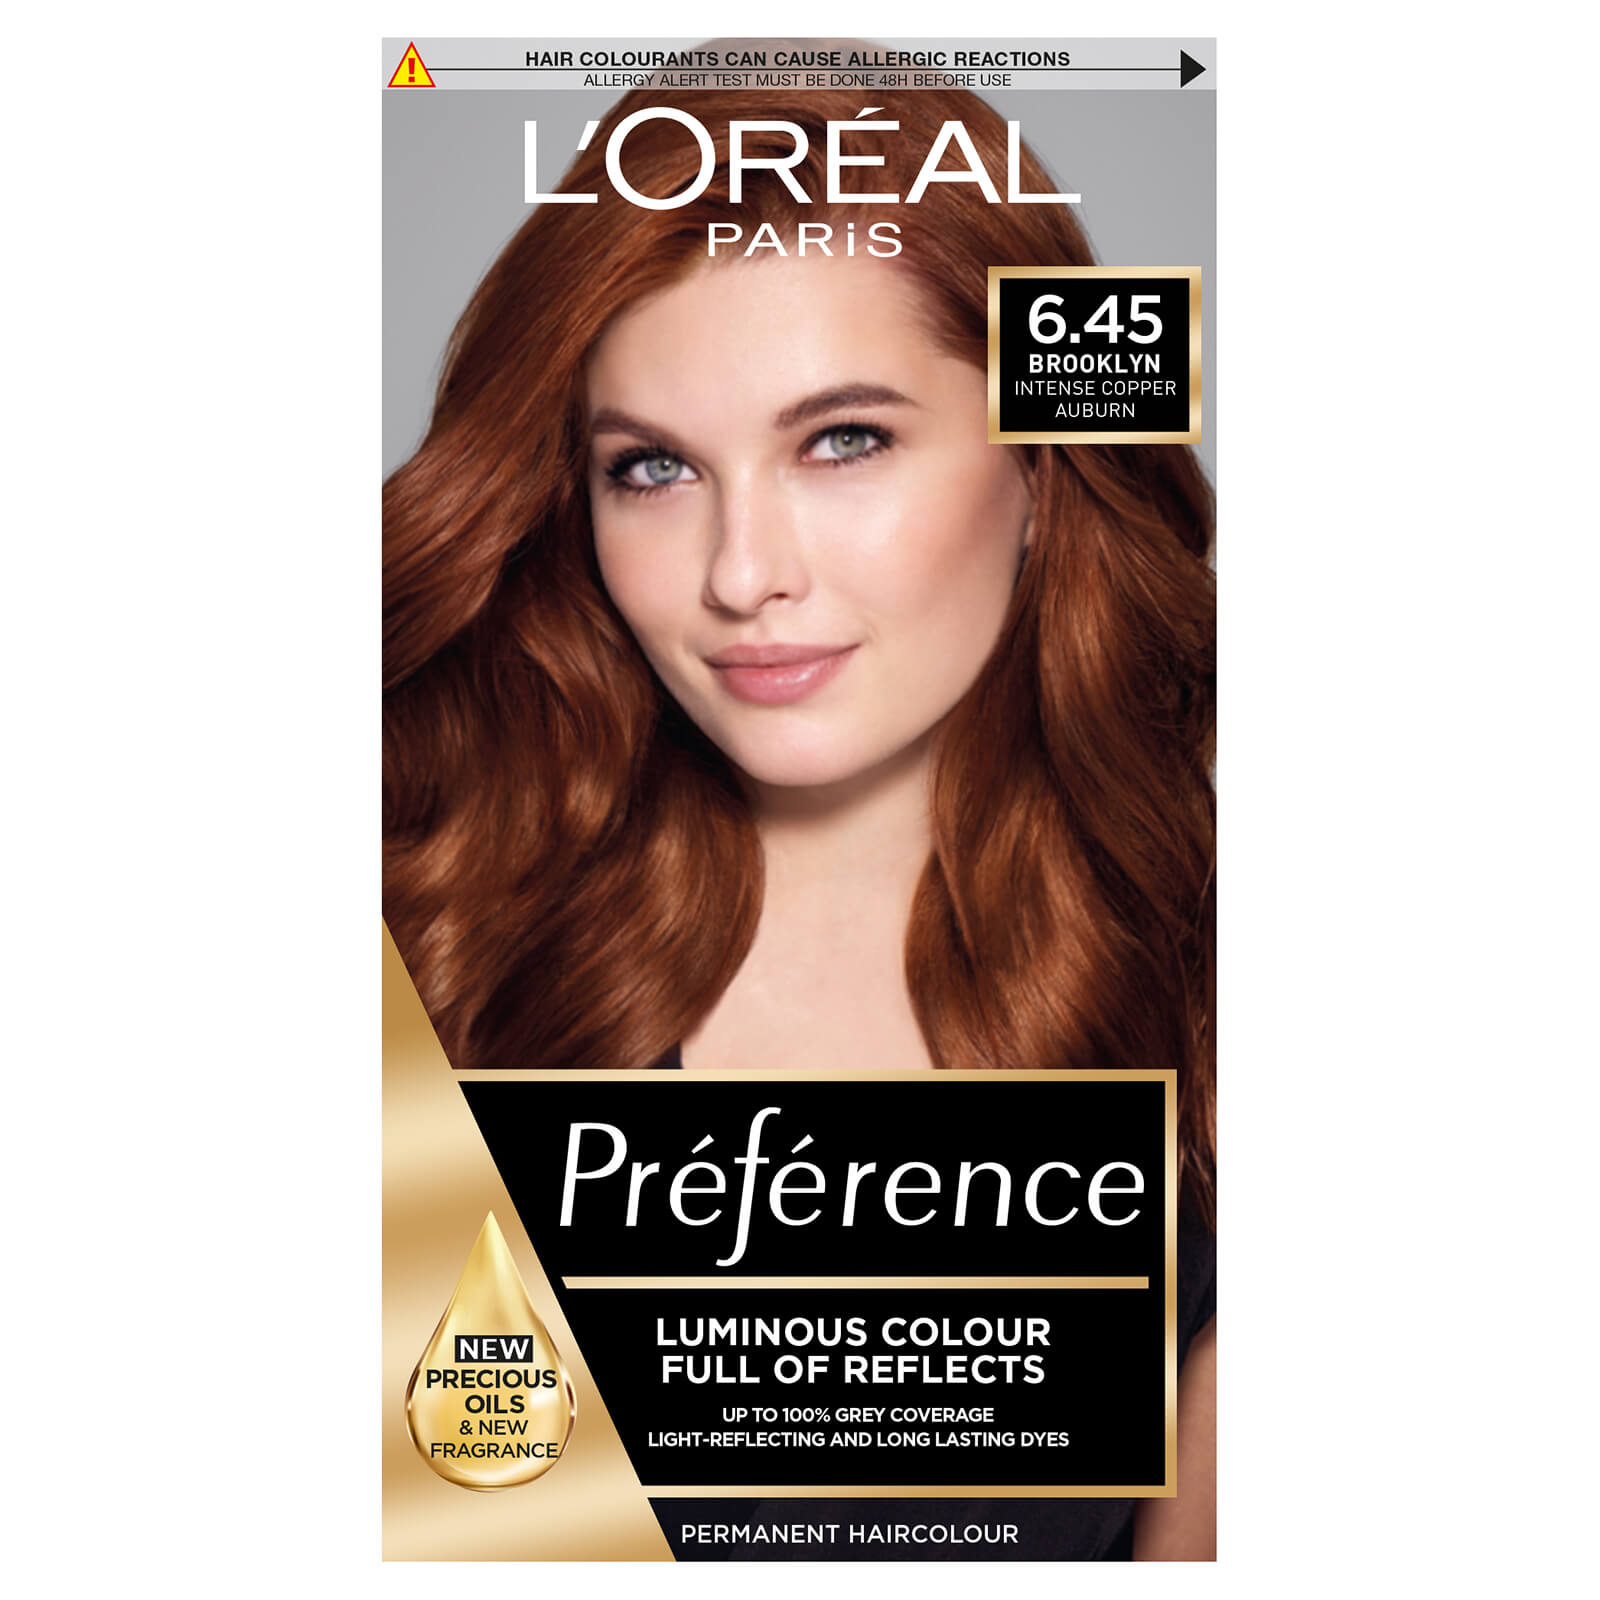 L'Oreal Paris Preference Infinia Hair Dye (Various Shades) - 6.45 Brooklyn Intense Copper Auburn